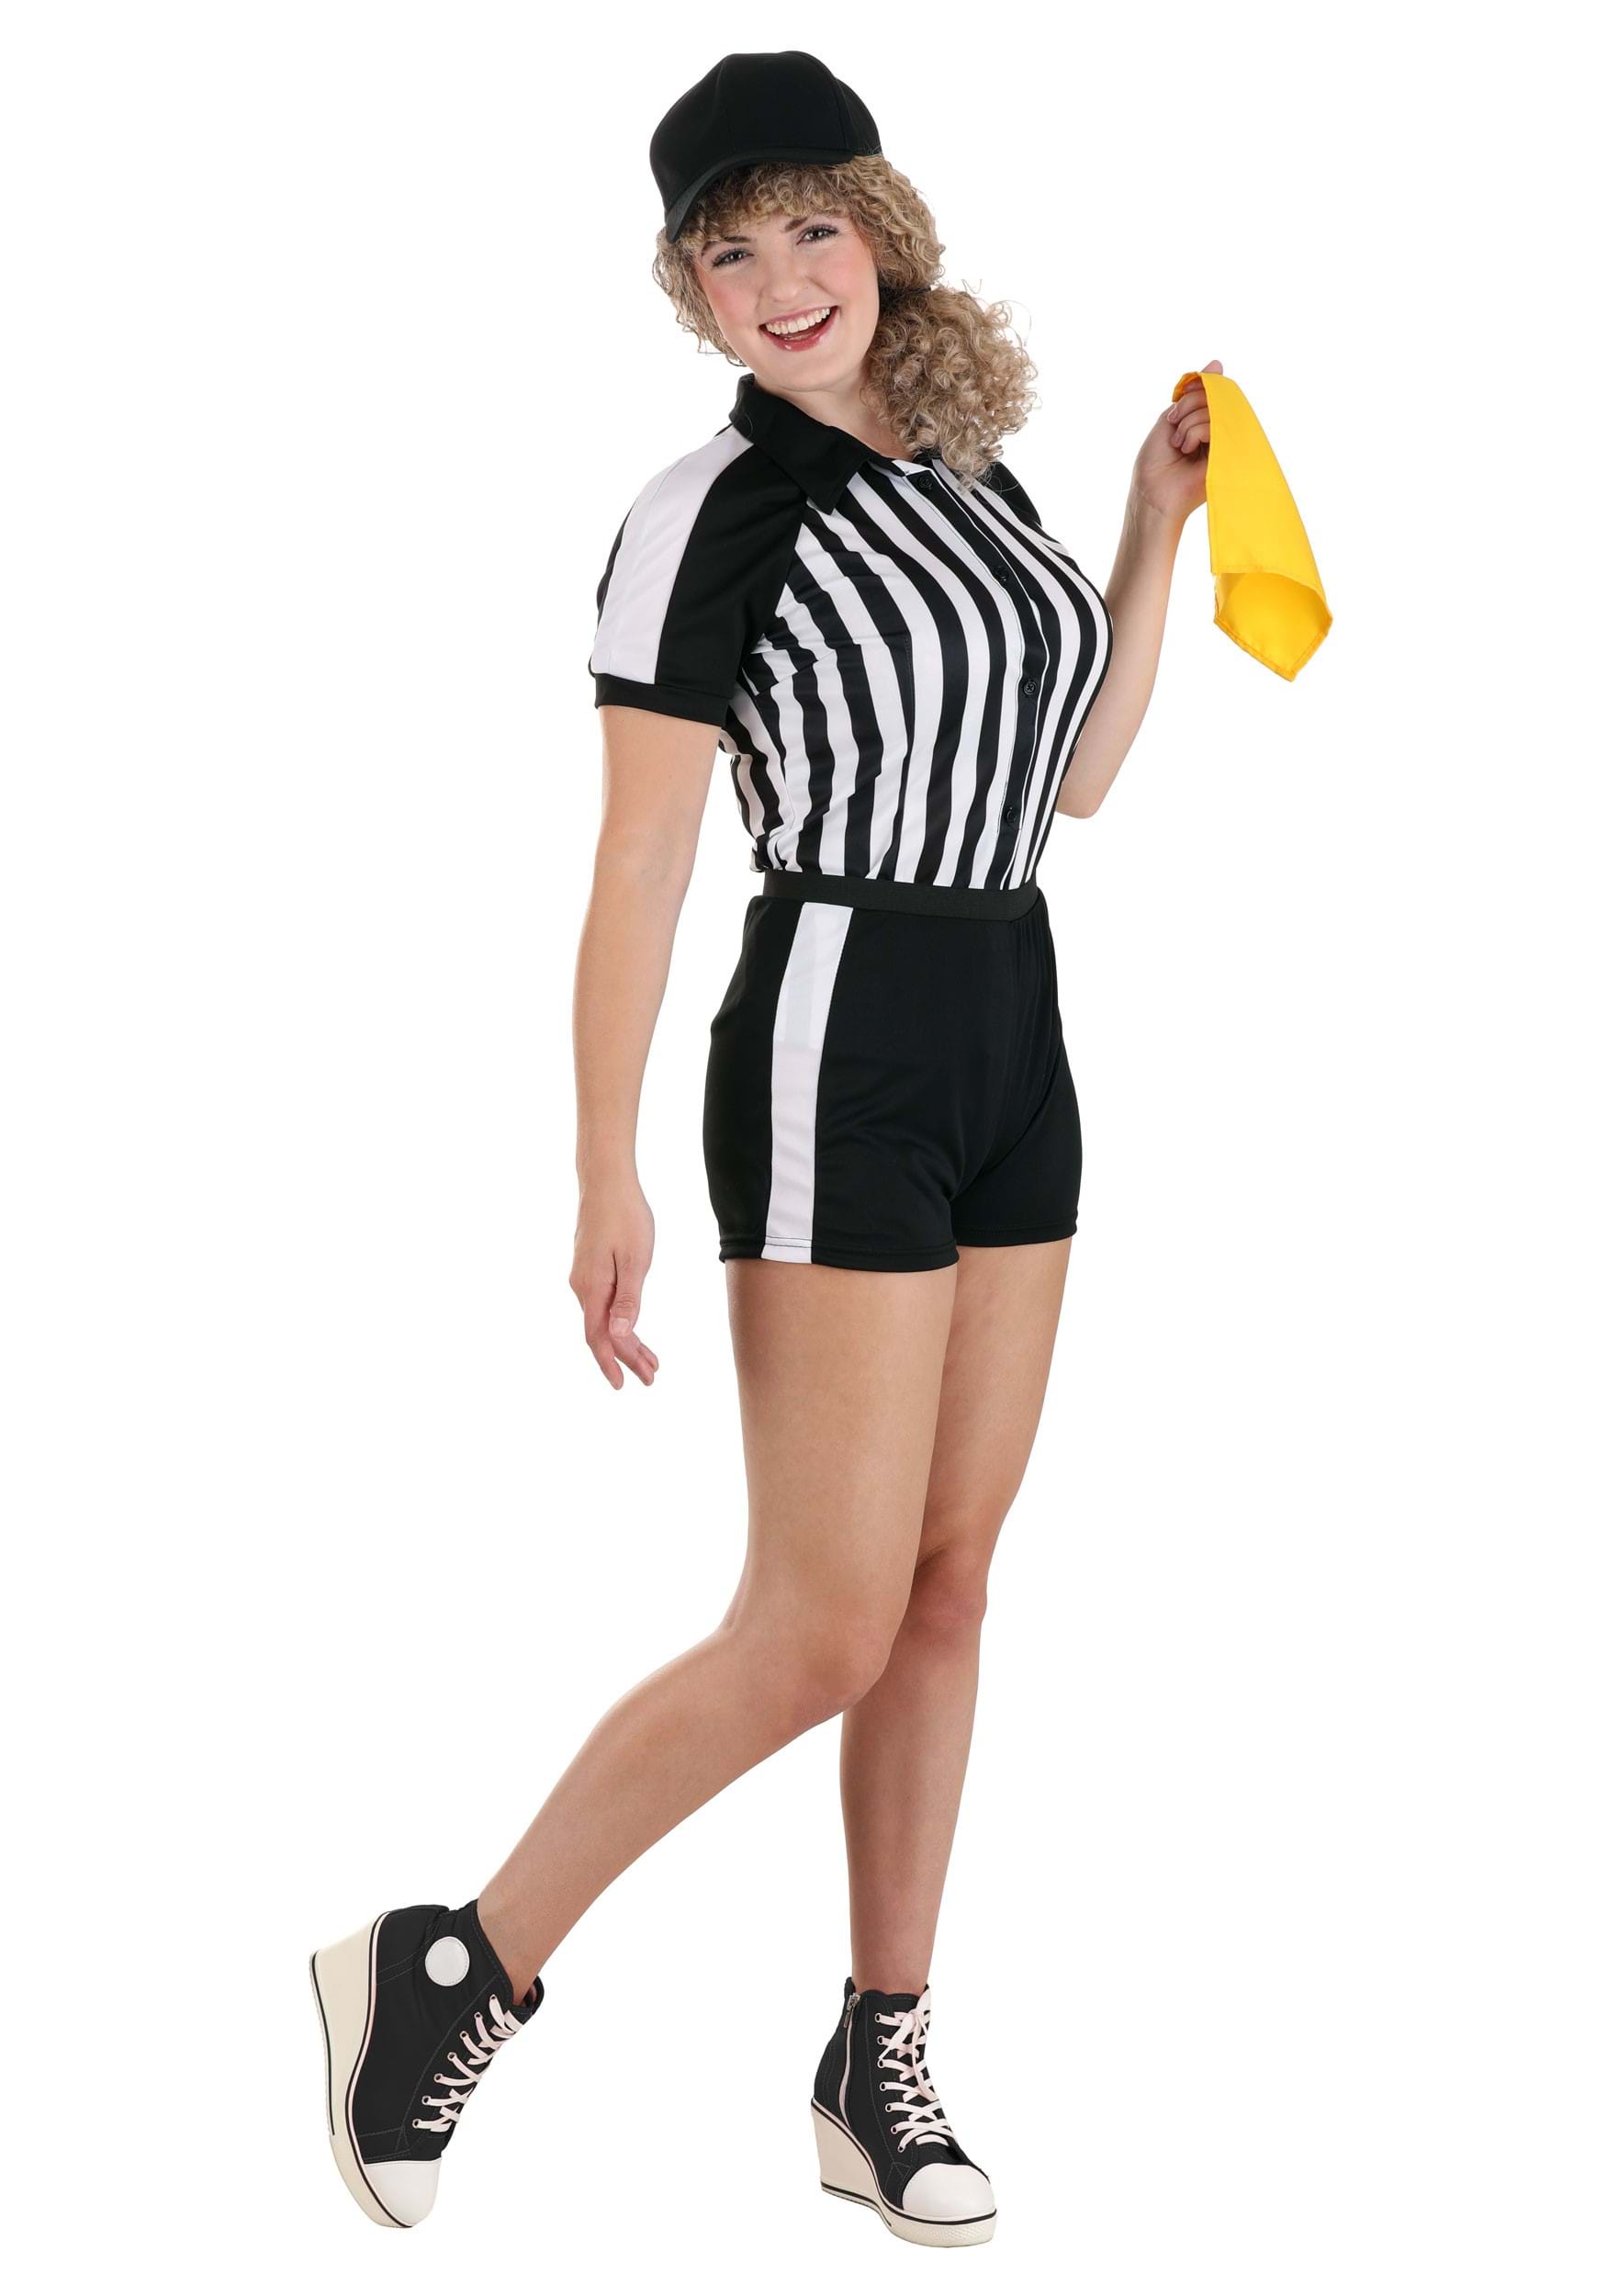 Racy Referee Women's Costume